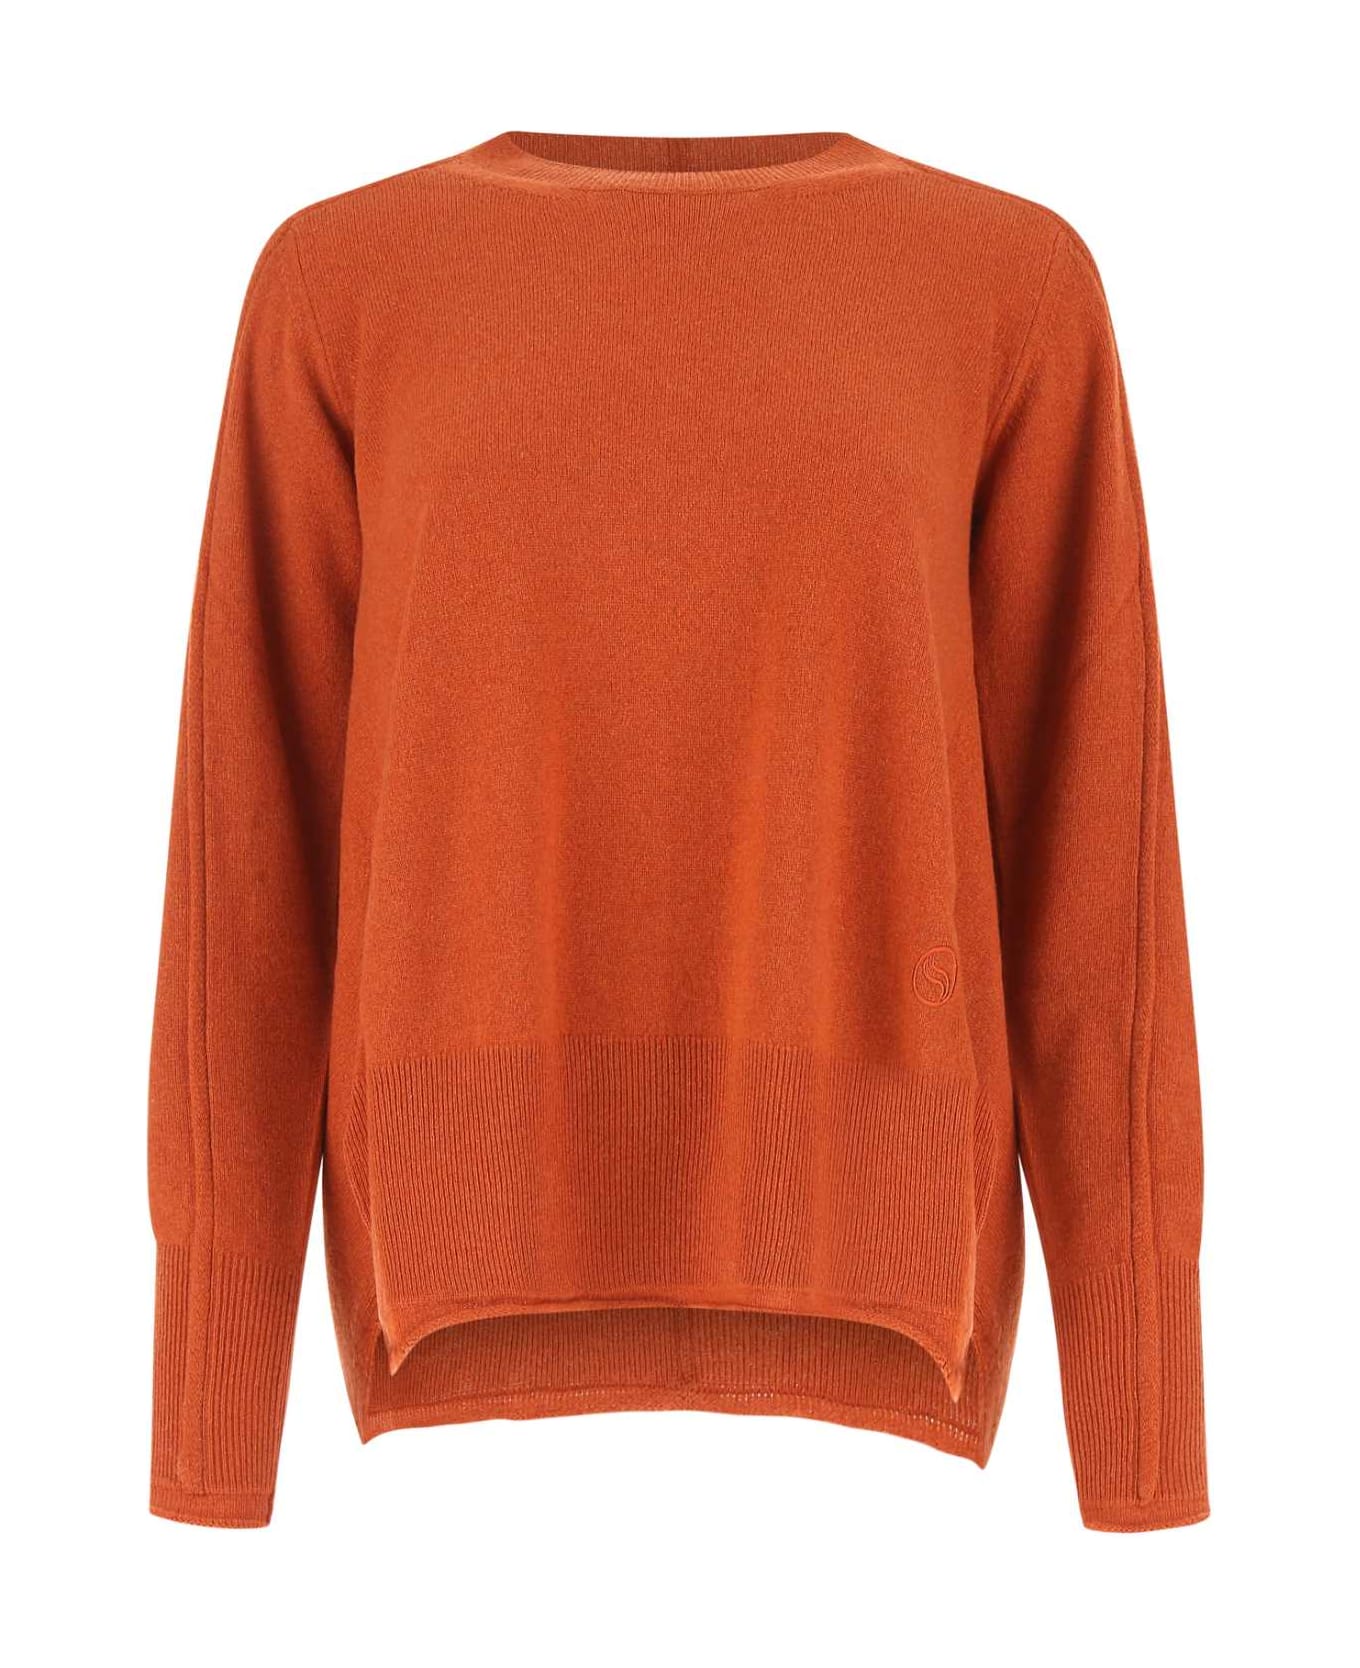 Stella McCartney Copper Cashmere Blend Oversize Sweater - 6302